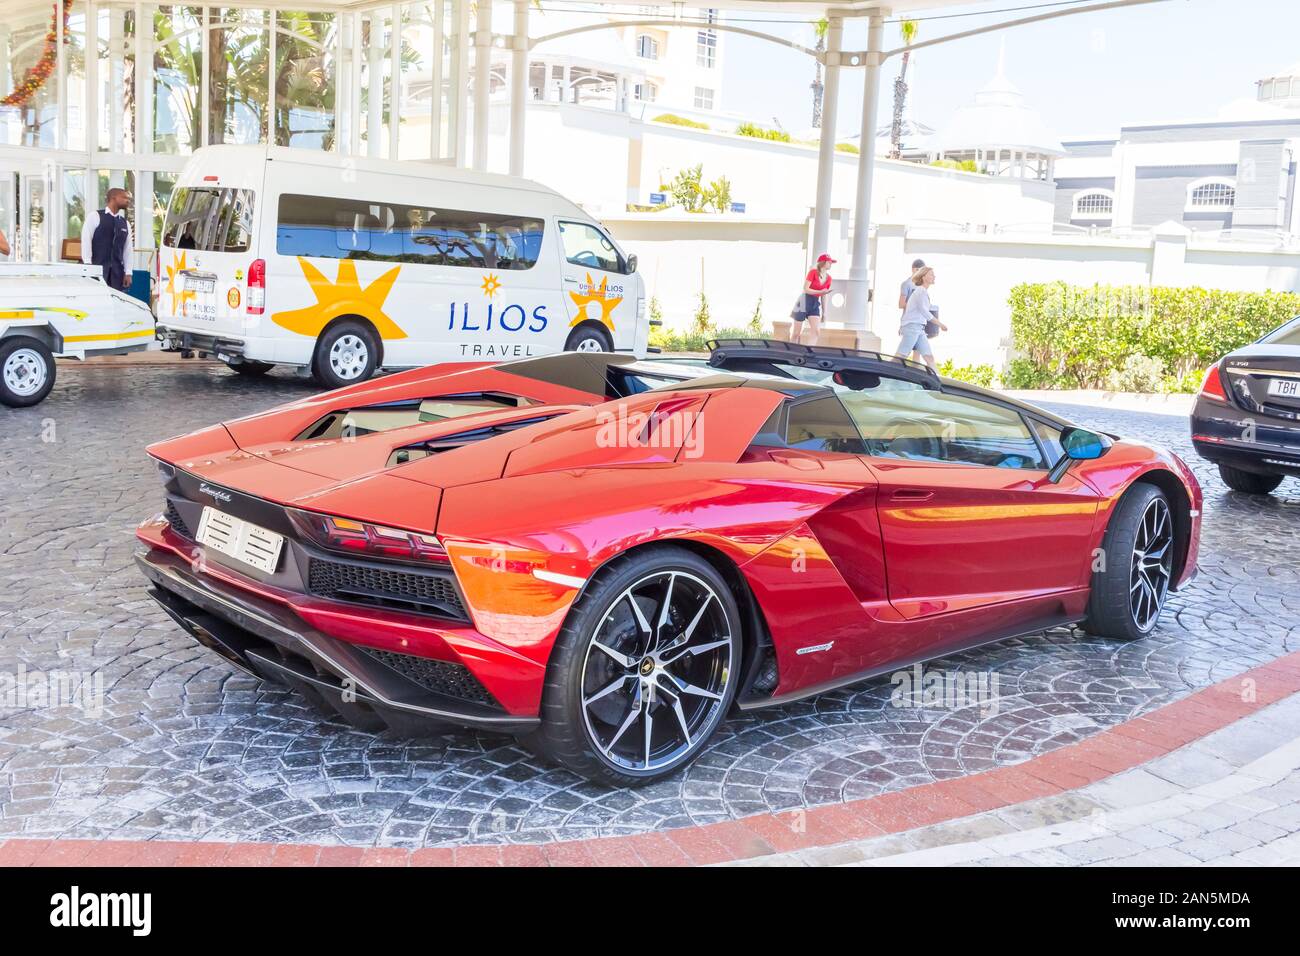 Kapstadt, Südafrika - 01. JANUAR 2019: Brandneue Lamborghini Aventador S vor der Table Bay Hotel an der V&A Waterfront in Kapstadt geparkt Stockfoto